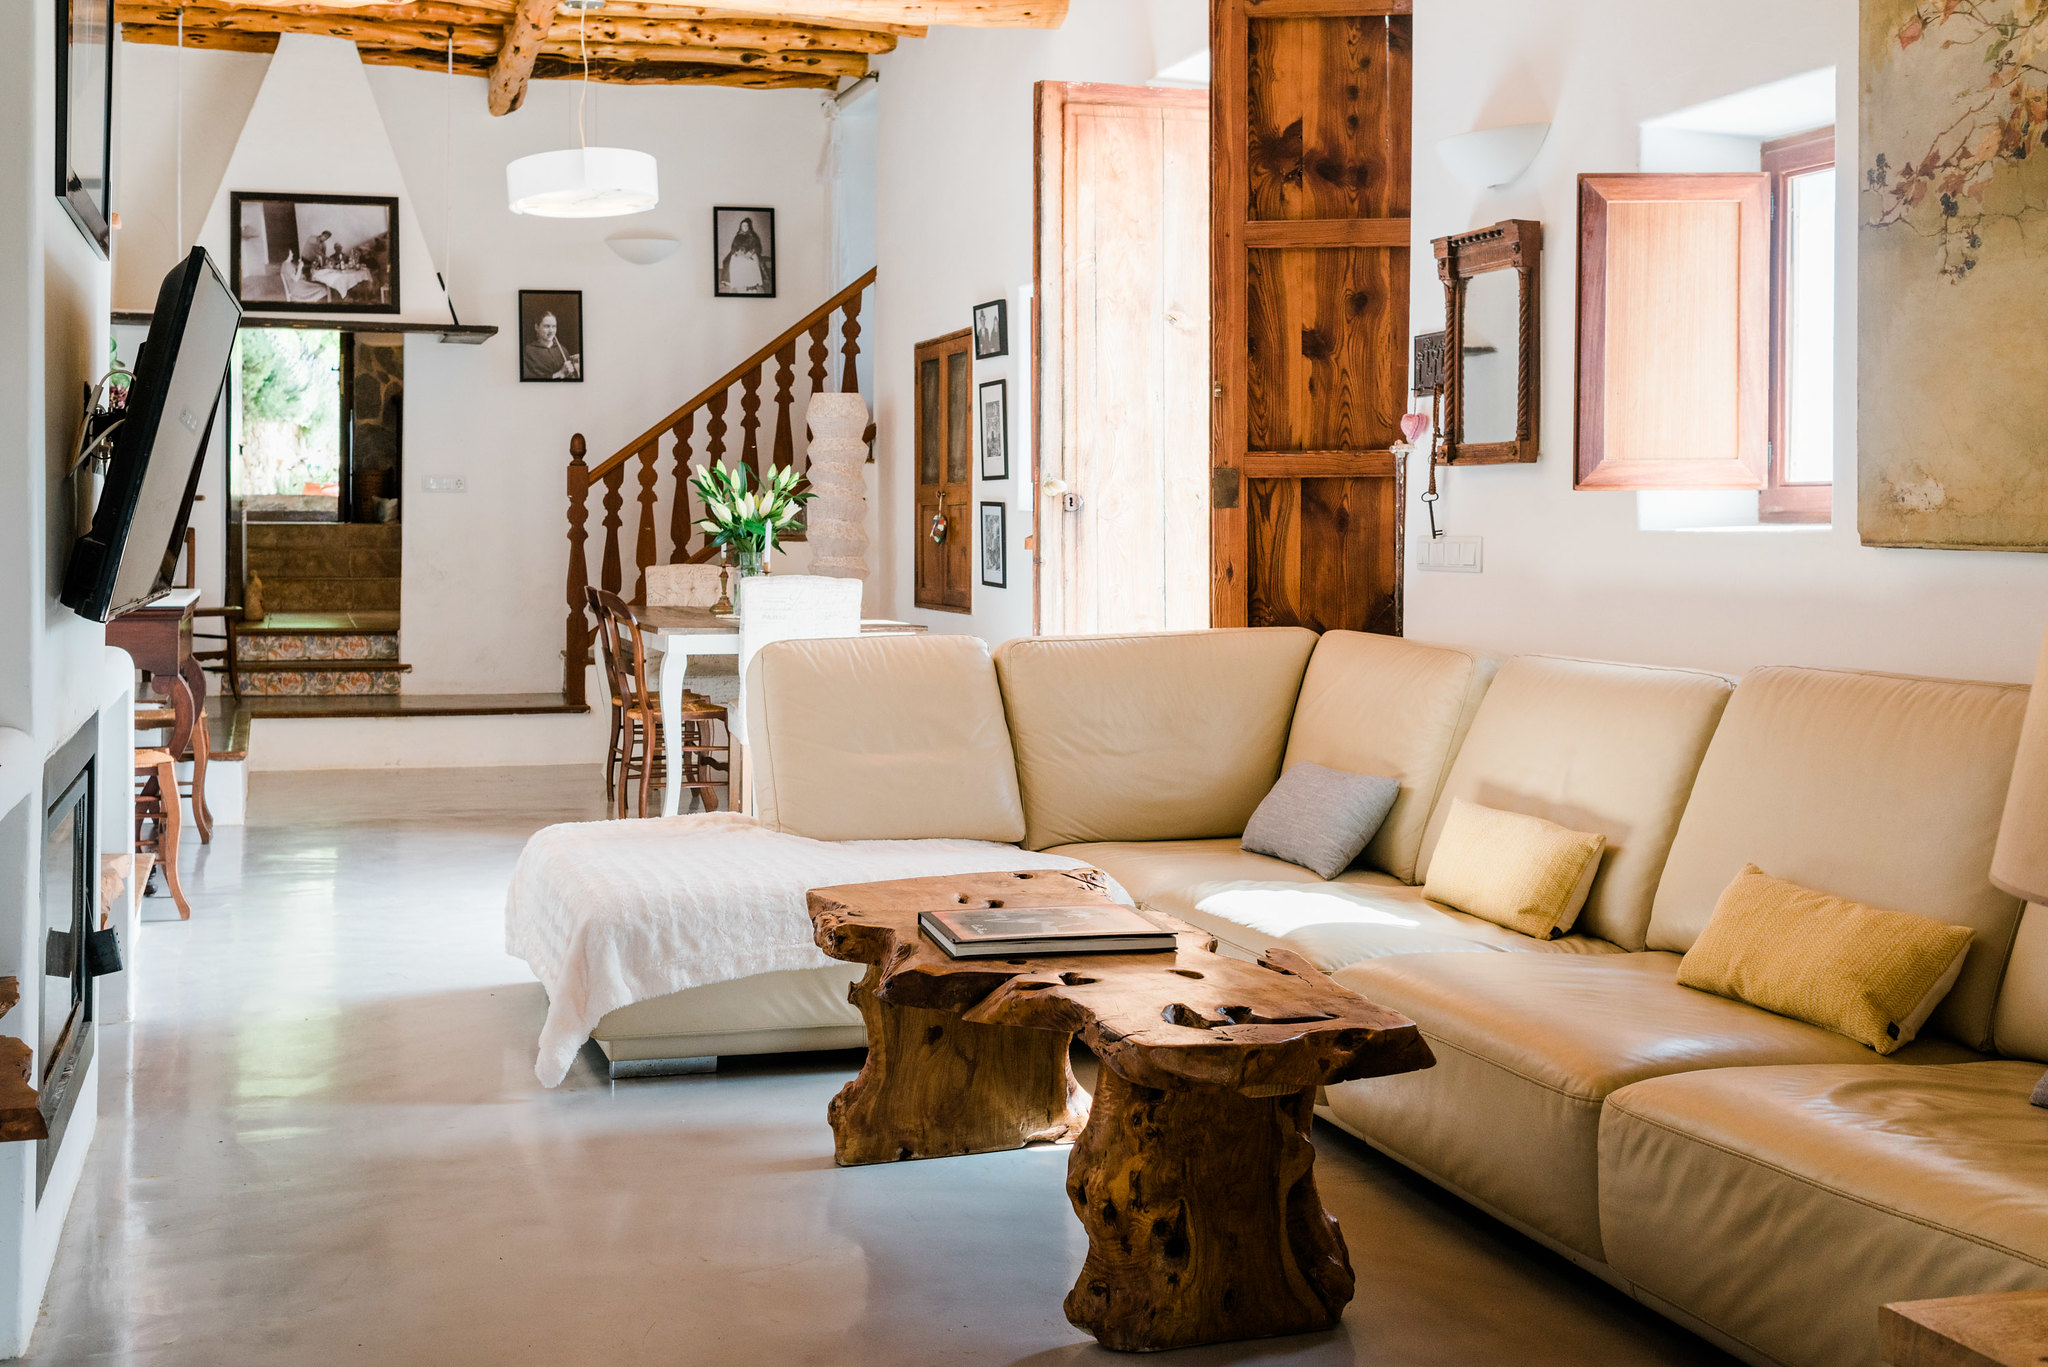 https://www.white-ibiza.com/wp-content/uploads/2020/06/white-ibiza-villas-los-corrales-interior-living-room.jpg